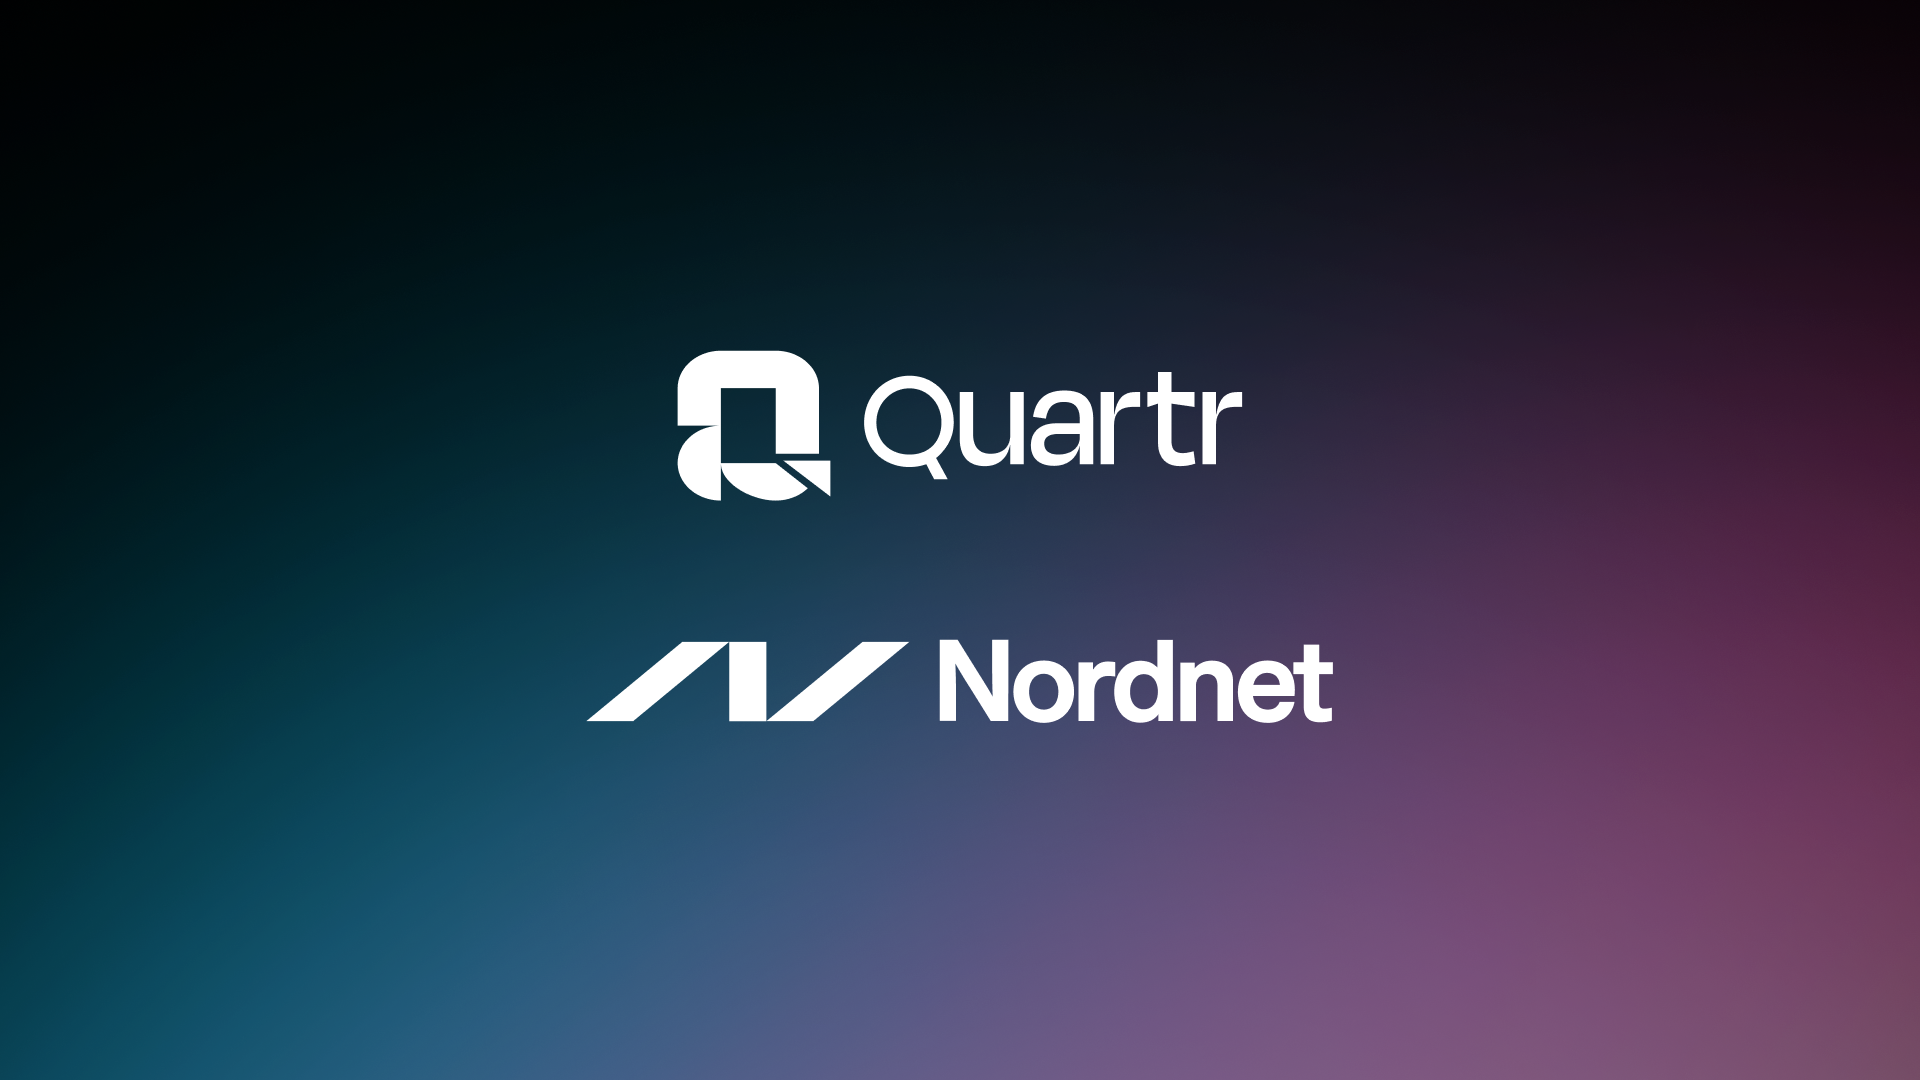 Quartr and Nordnet logos